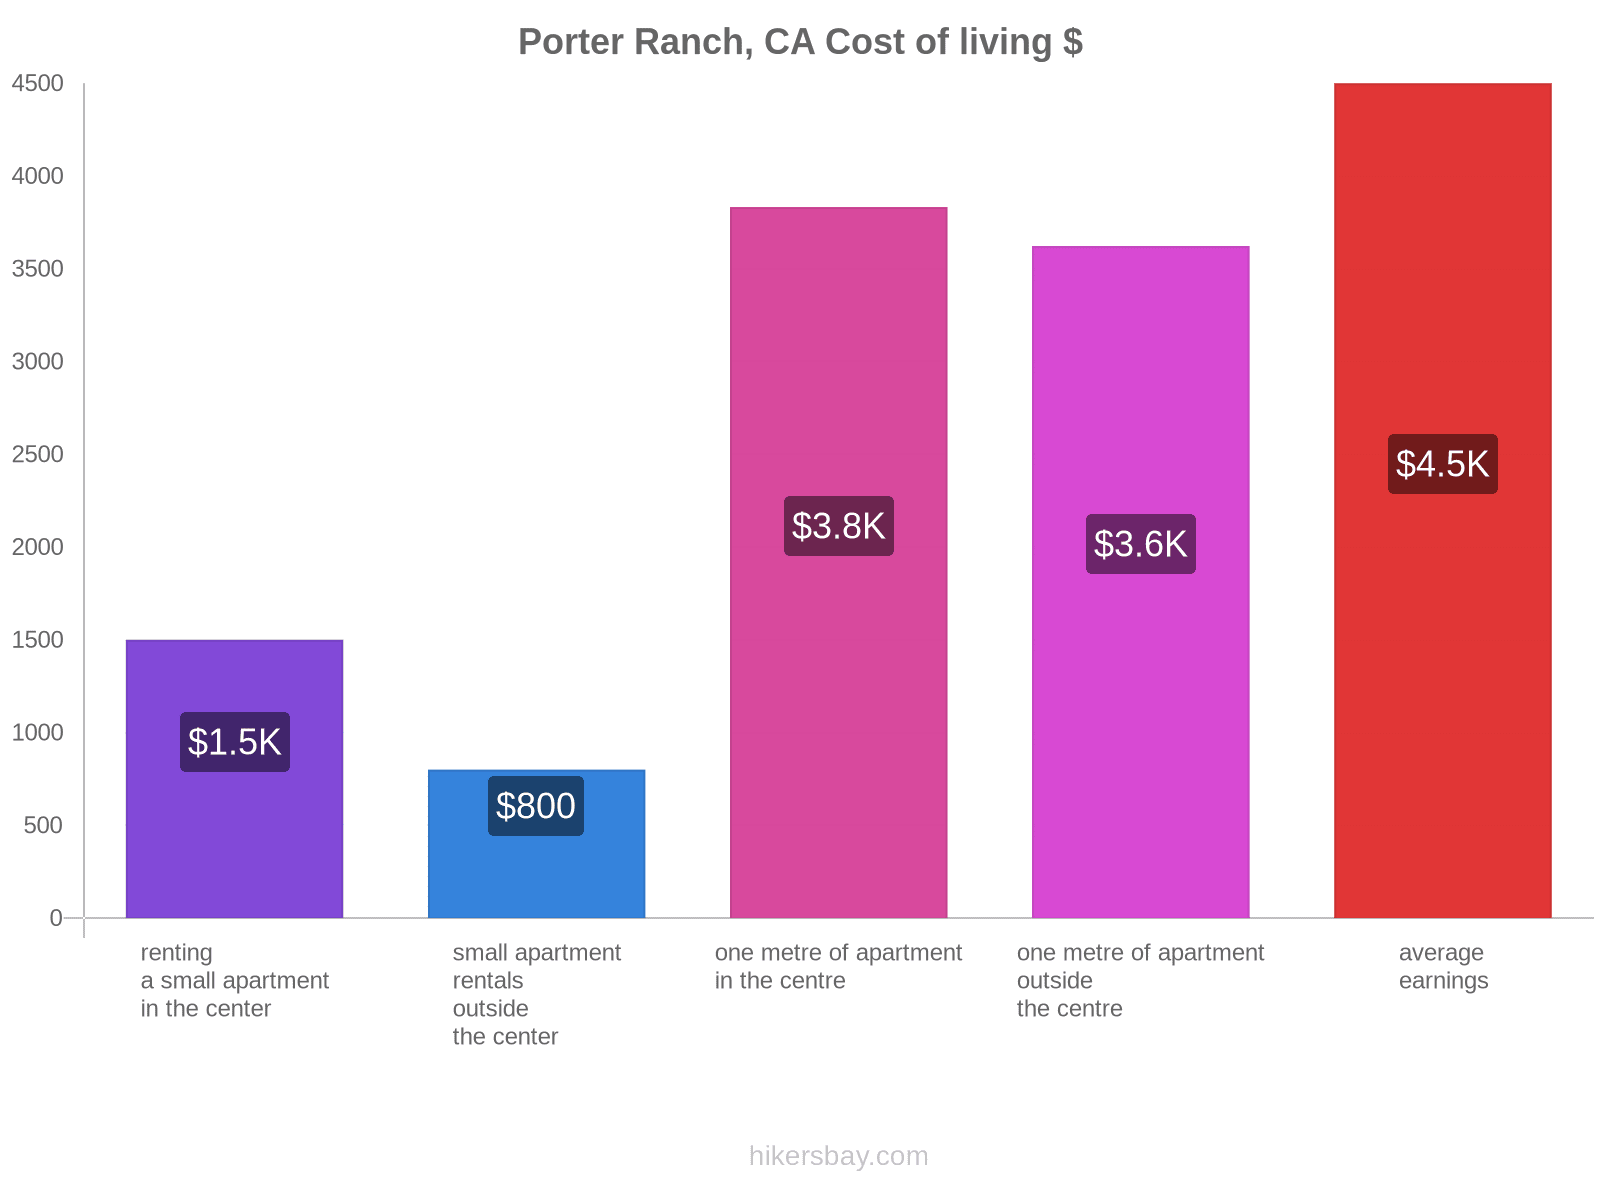 Porter Ranch, CA cost of living hikersbay.com